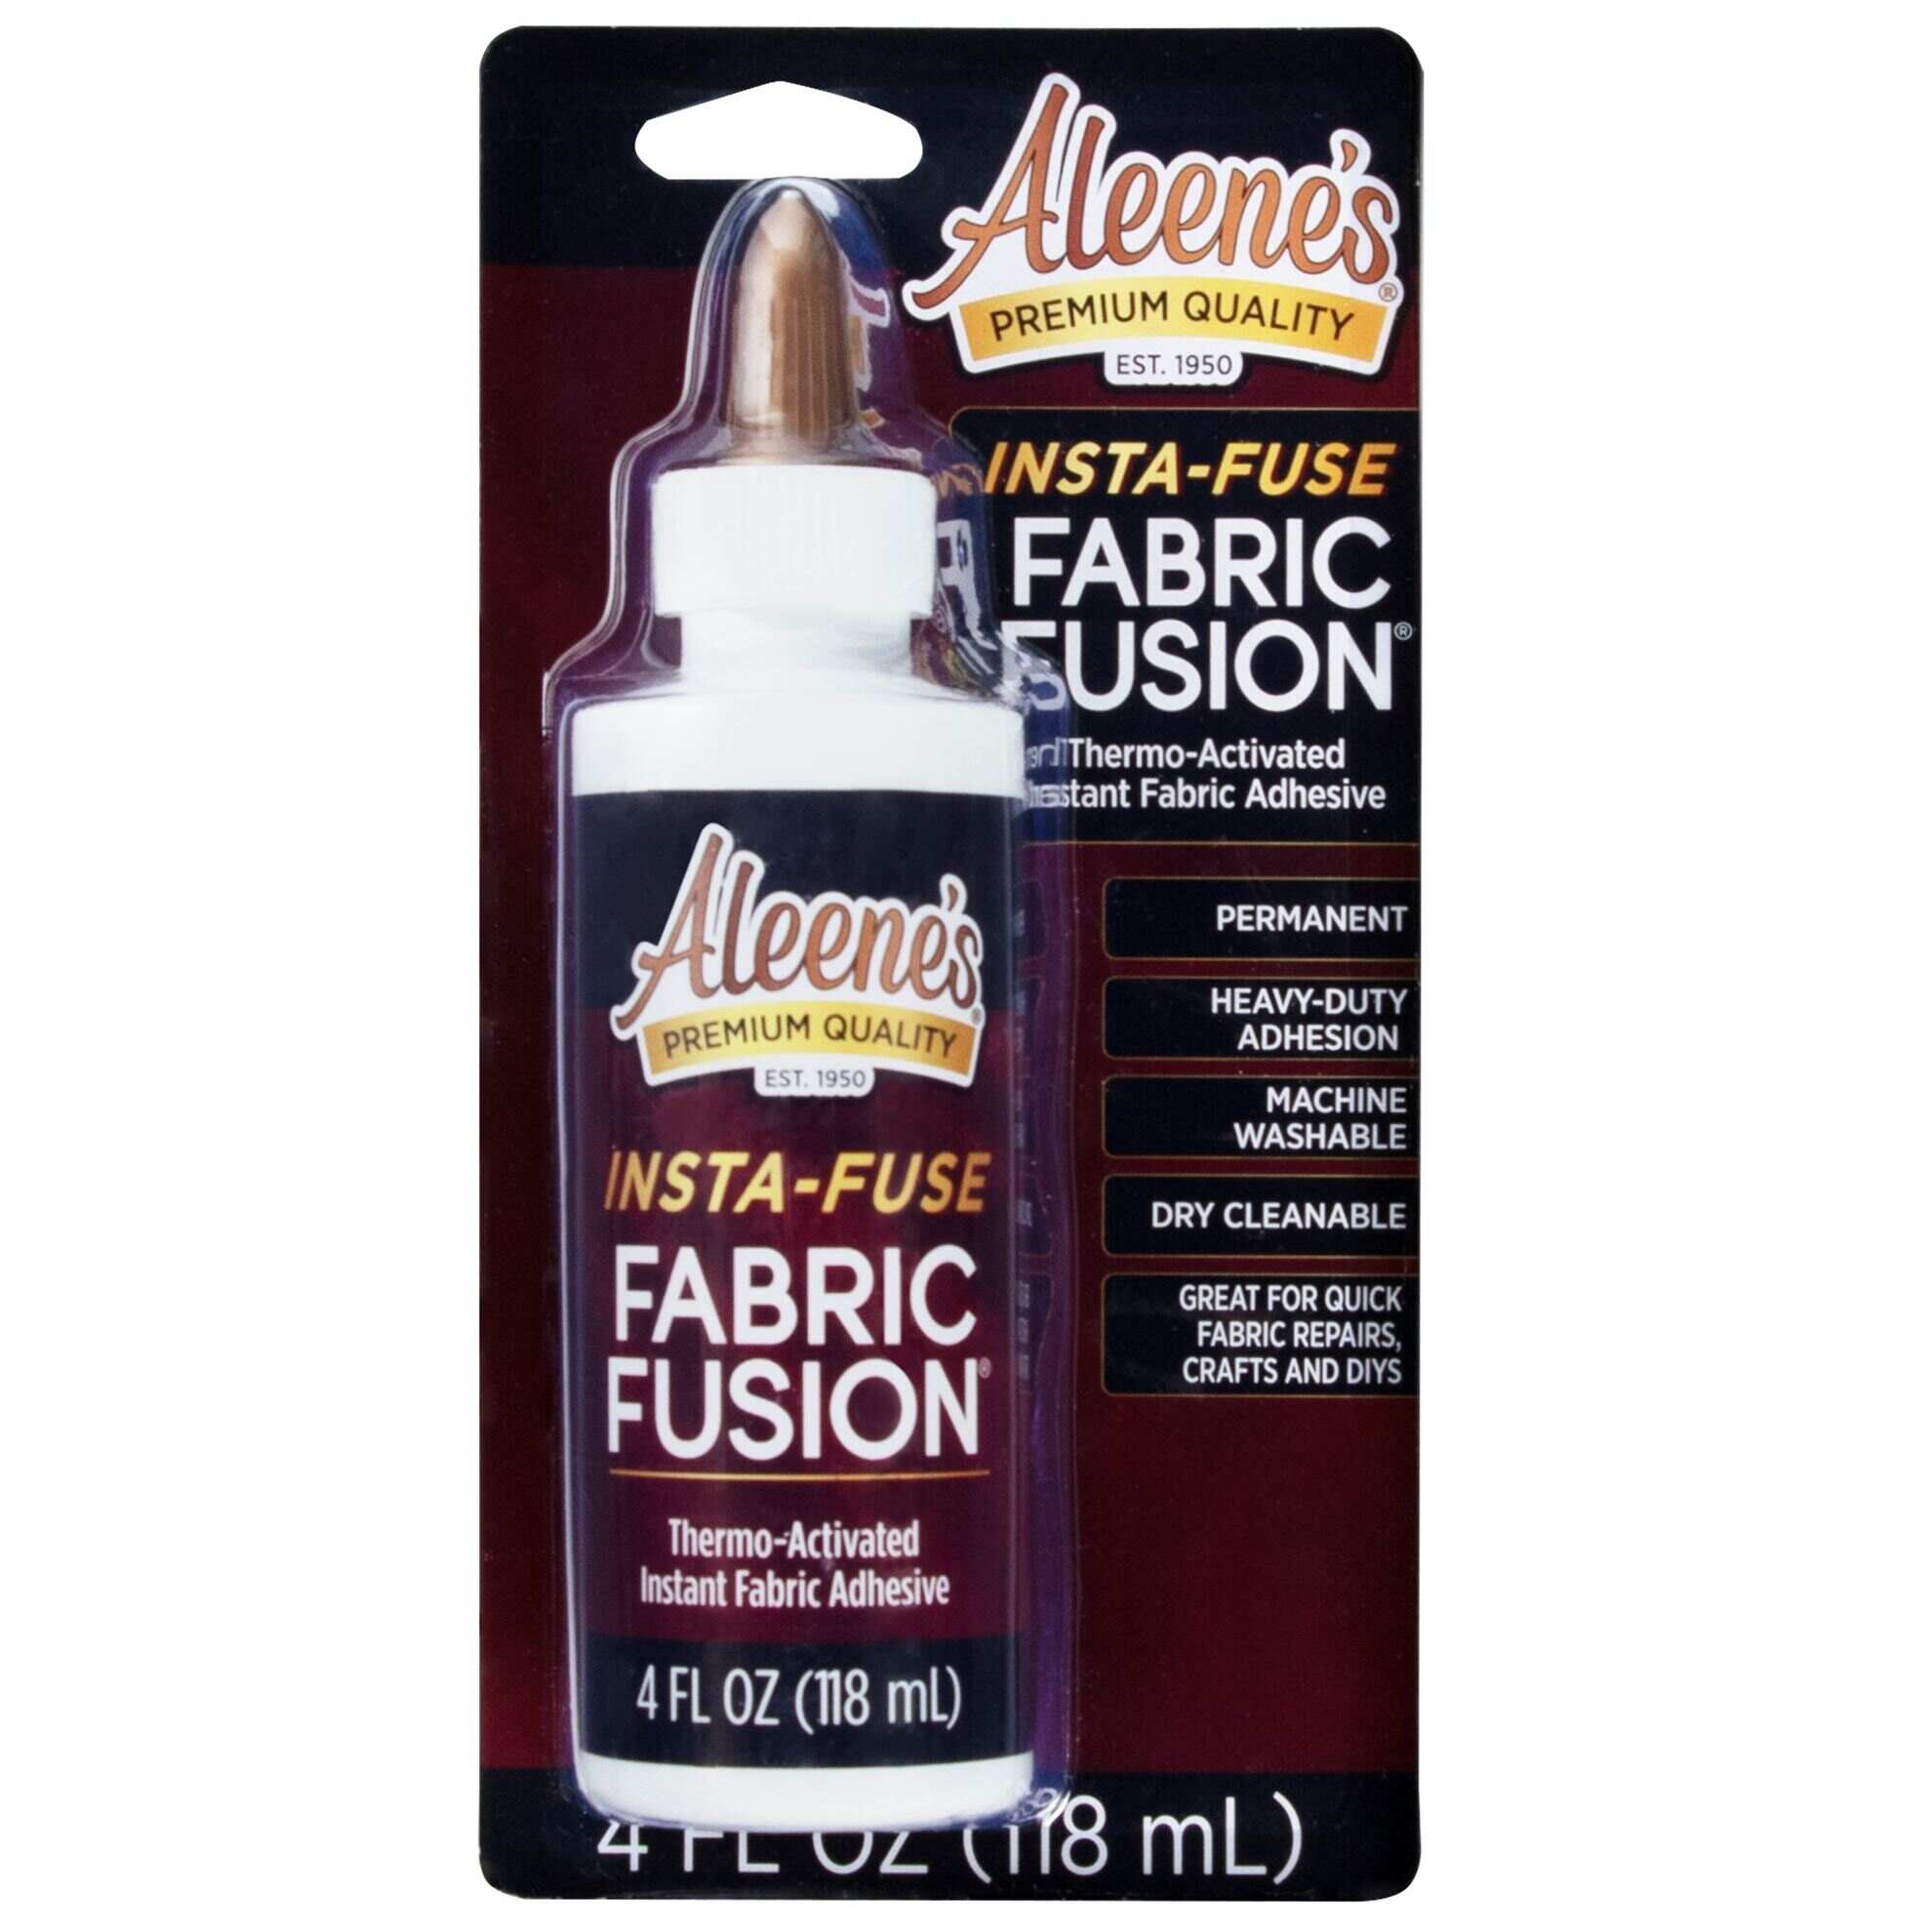 Aleene's Original Glues - Aleene's Insta-Fuse Fabric Fusion Thermo